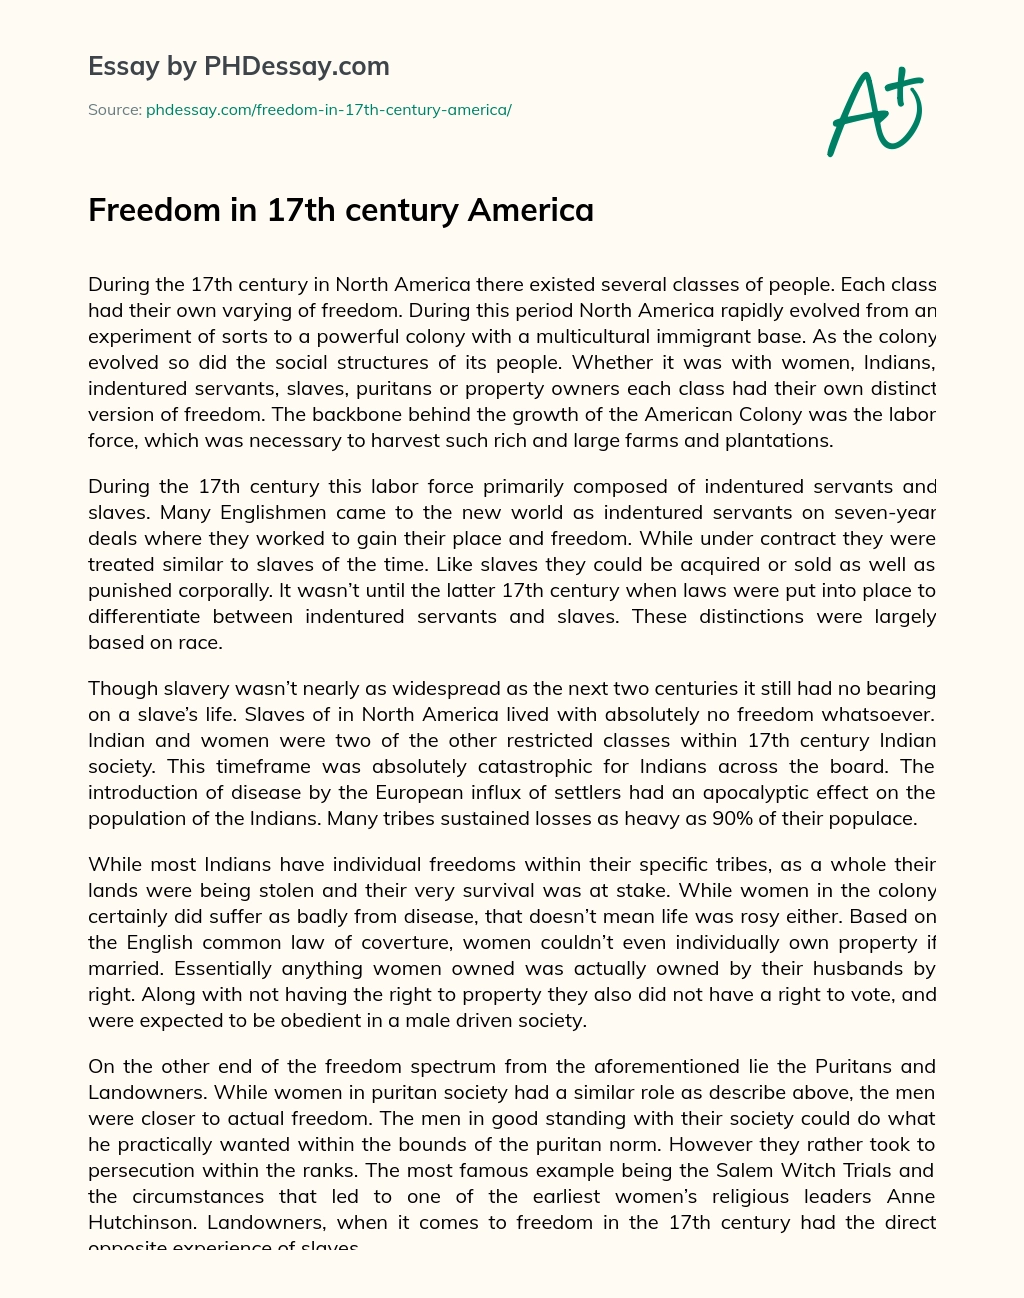 Freedom in 17th century America essay